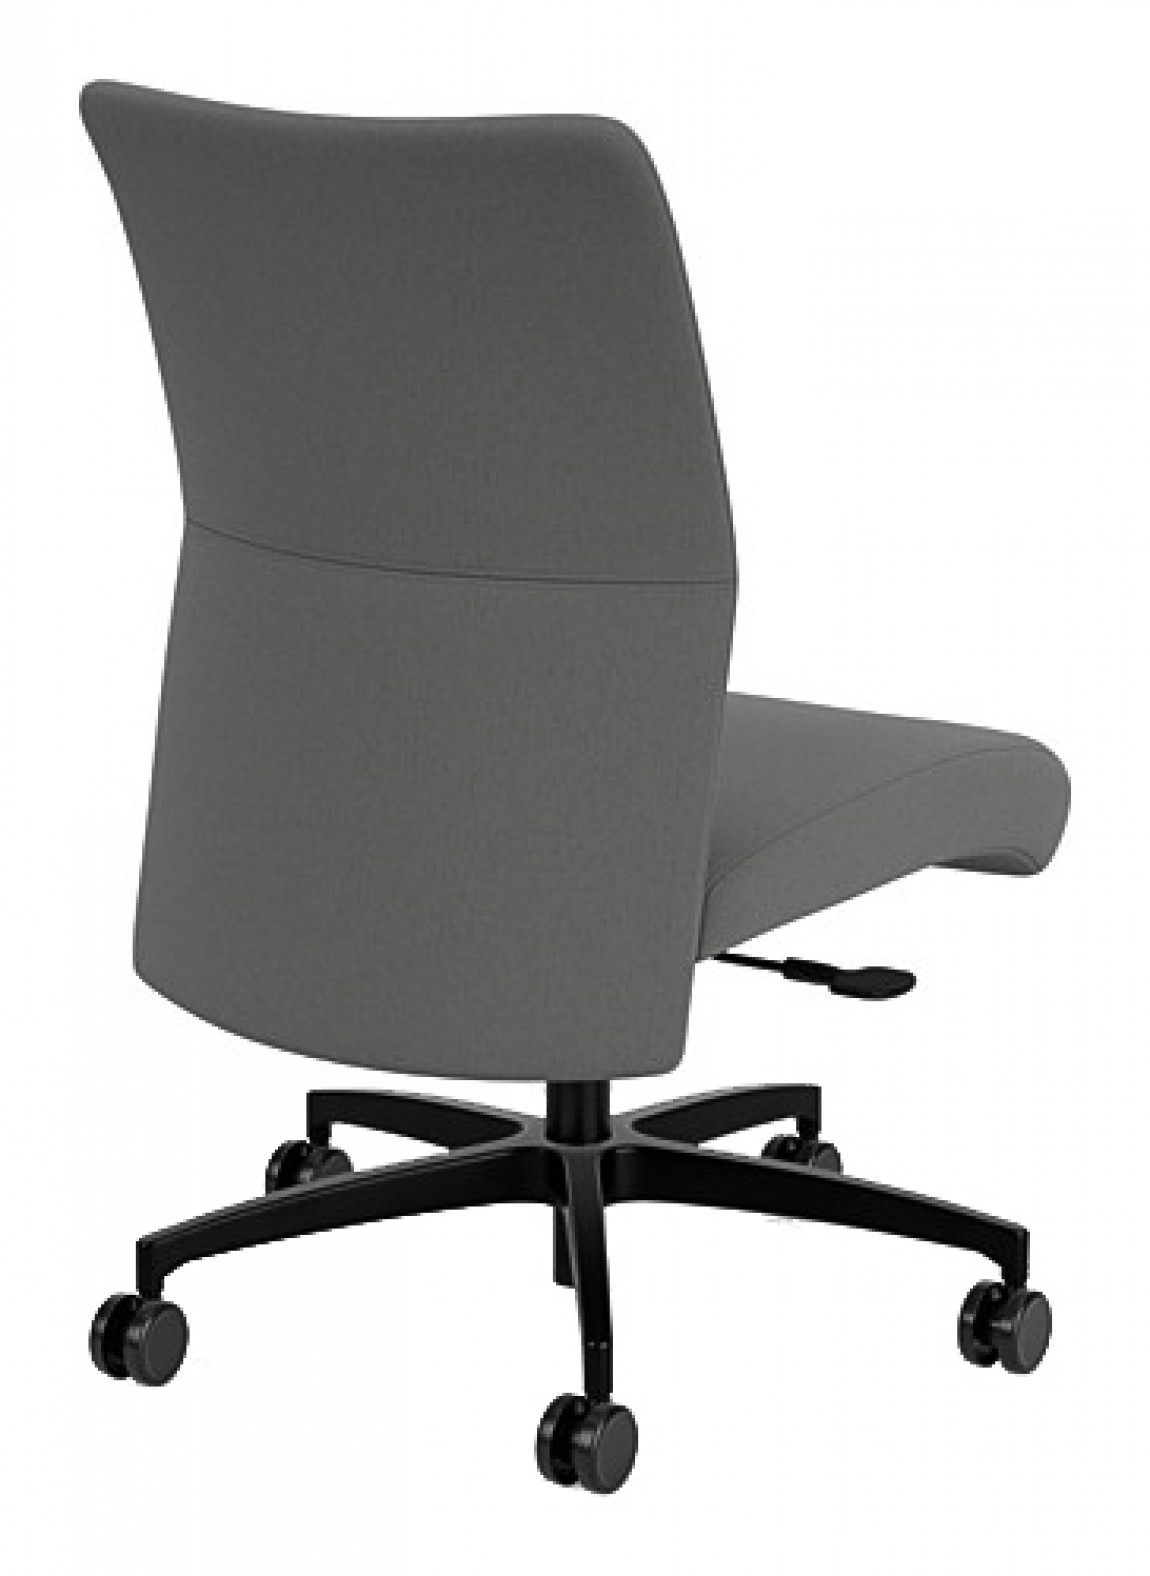 Grey Armless Adjustable Office Chair 26.5